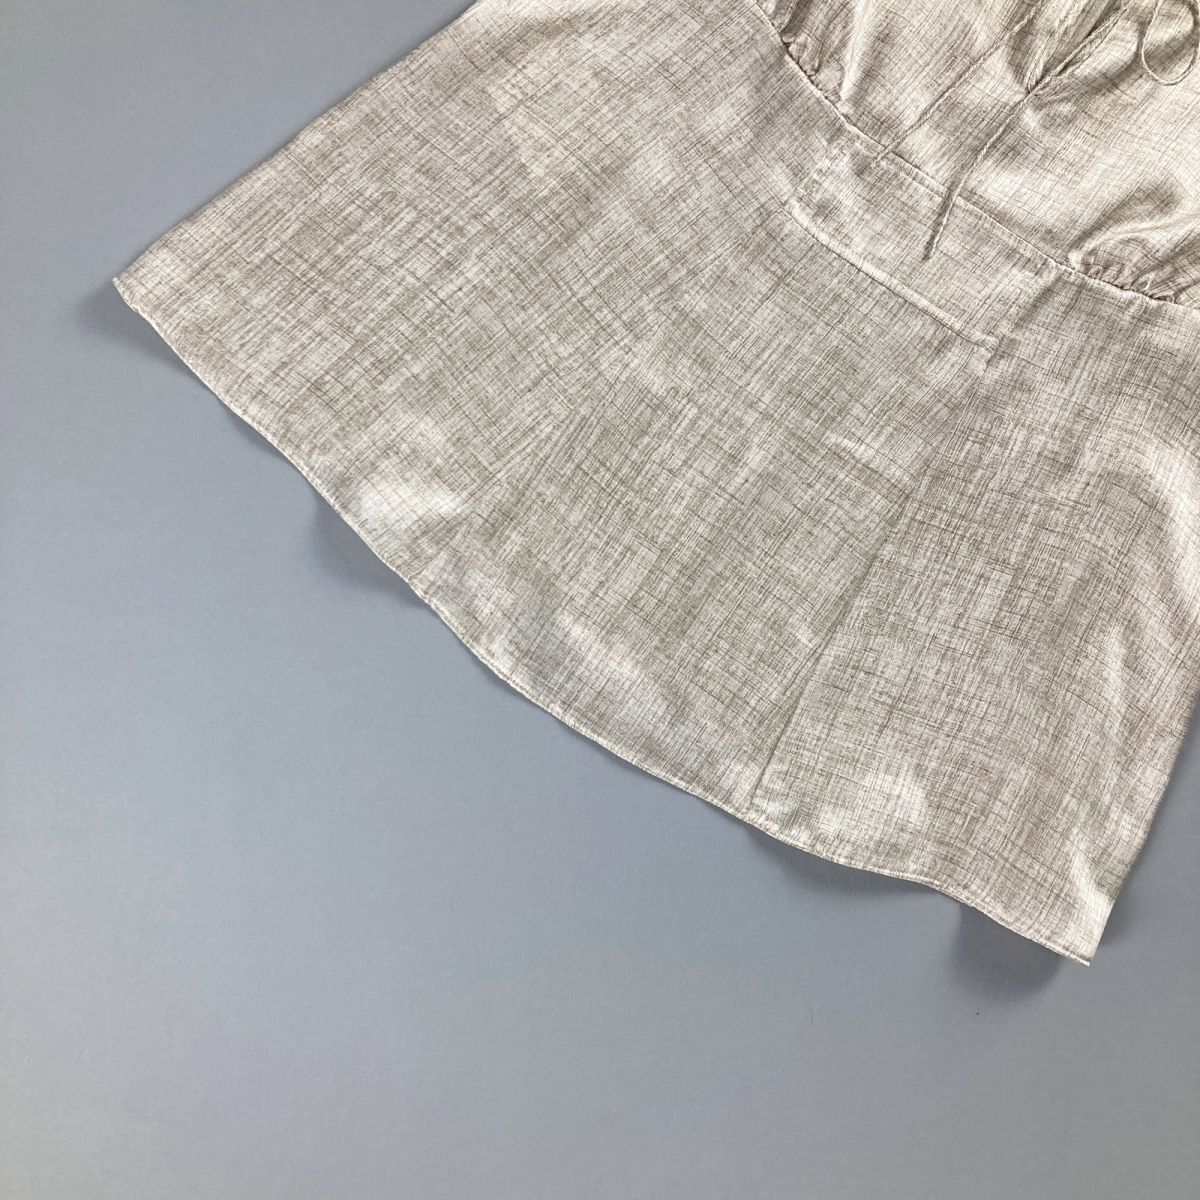  прекрасный товар ARMANI COLLEZIONI Armani koretso-ni шелк 100% безрукавка блуза лента tops женский бежевый размер 38*NC1253